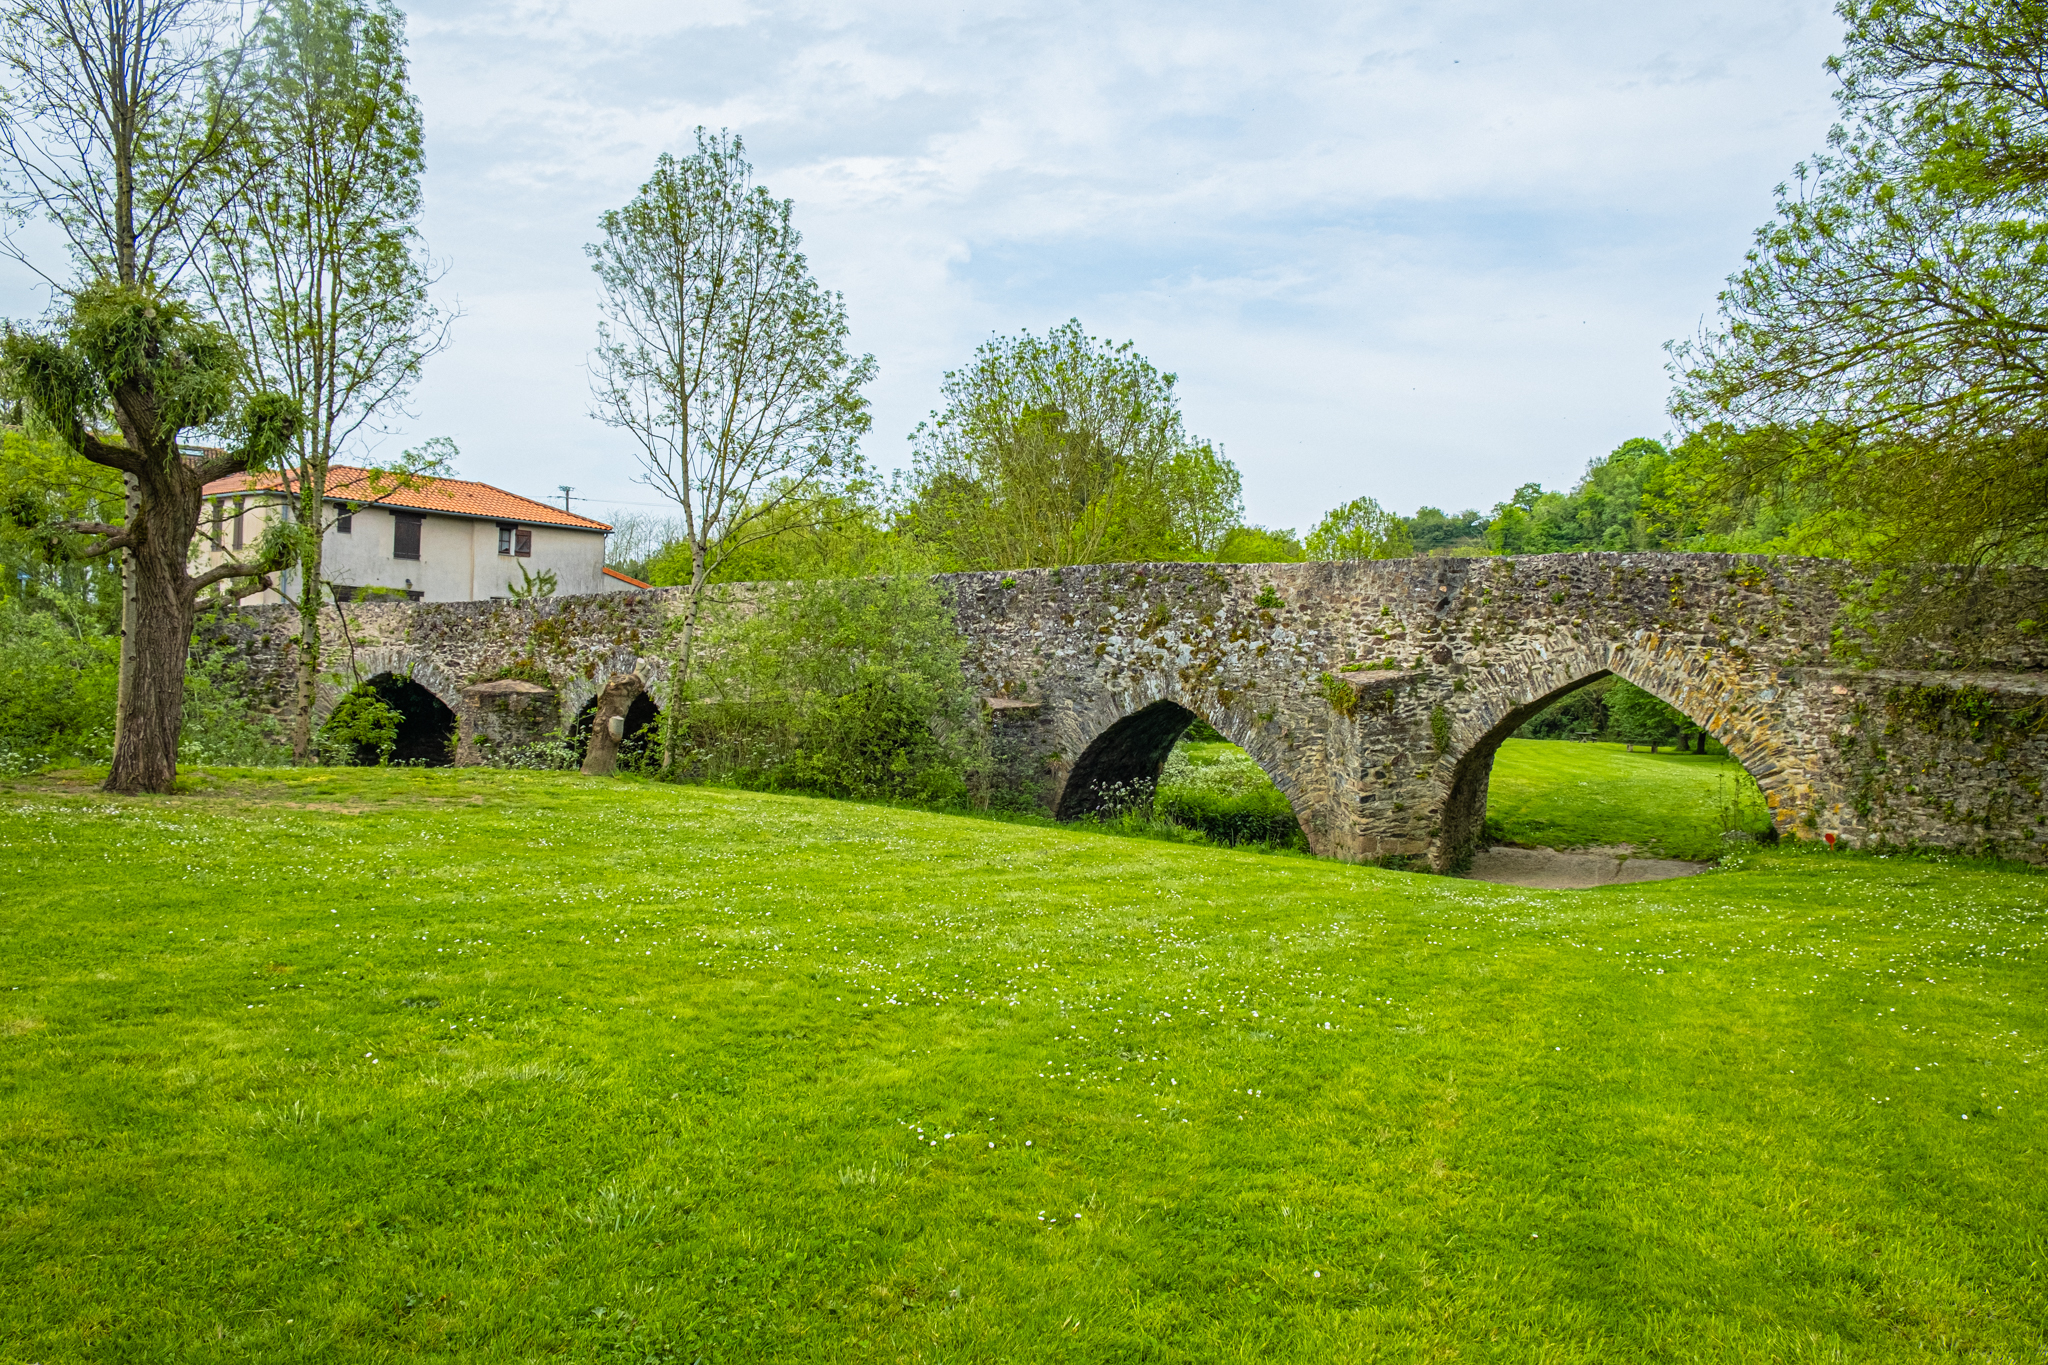 Mauges Pont De Bohardy